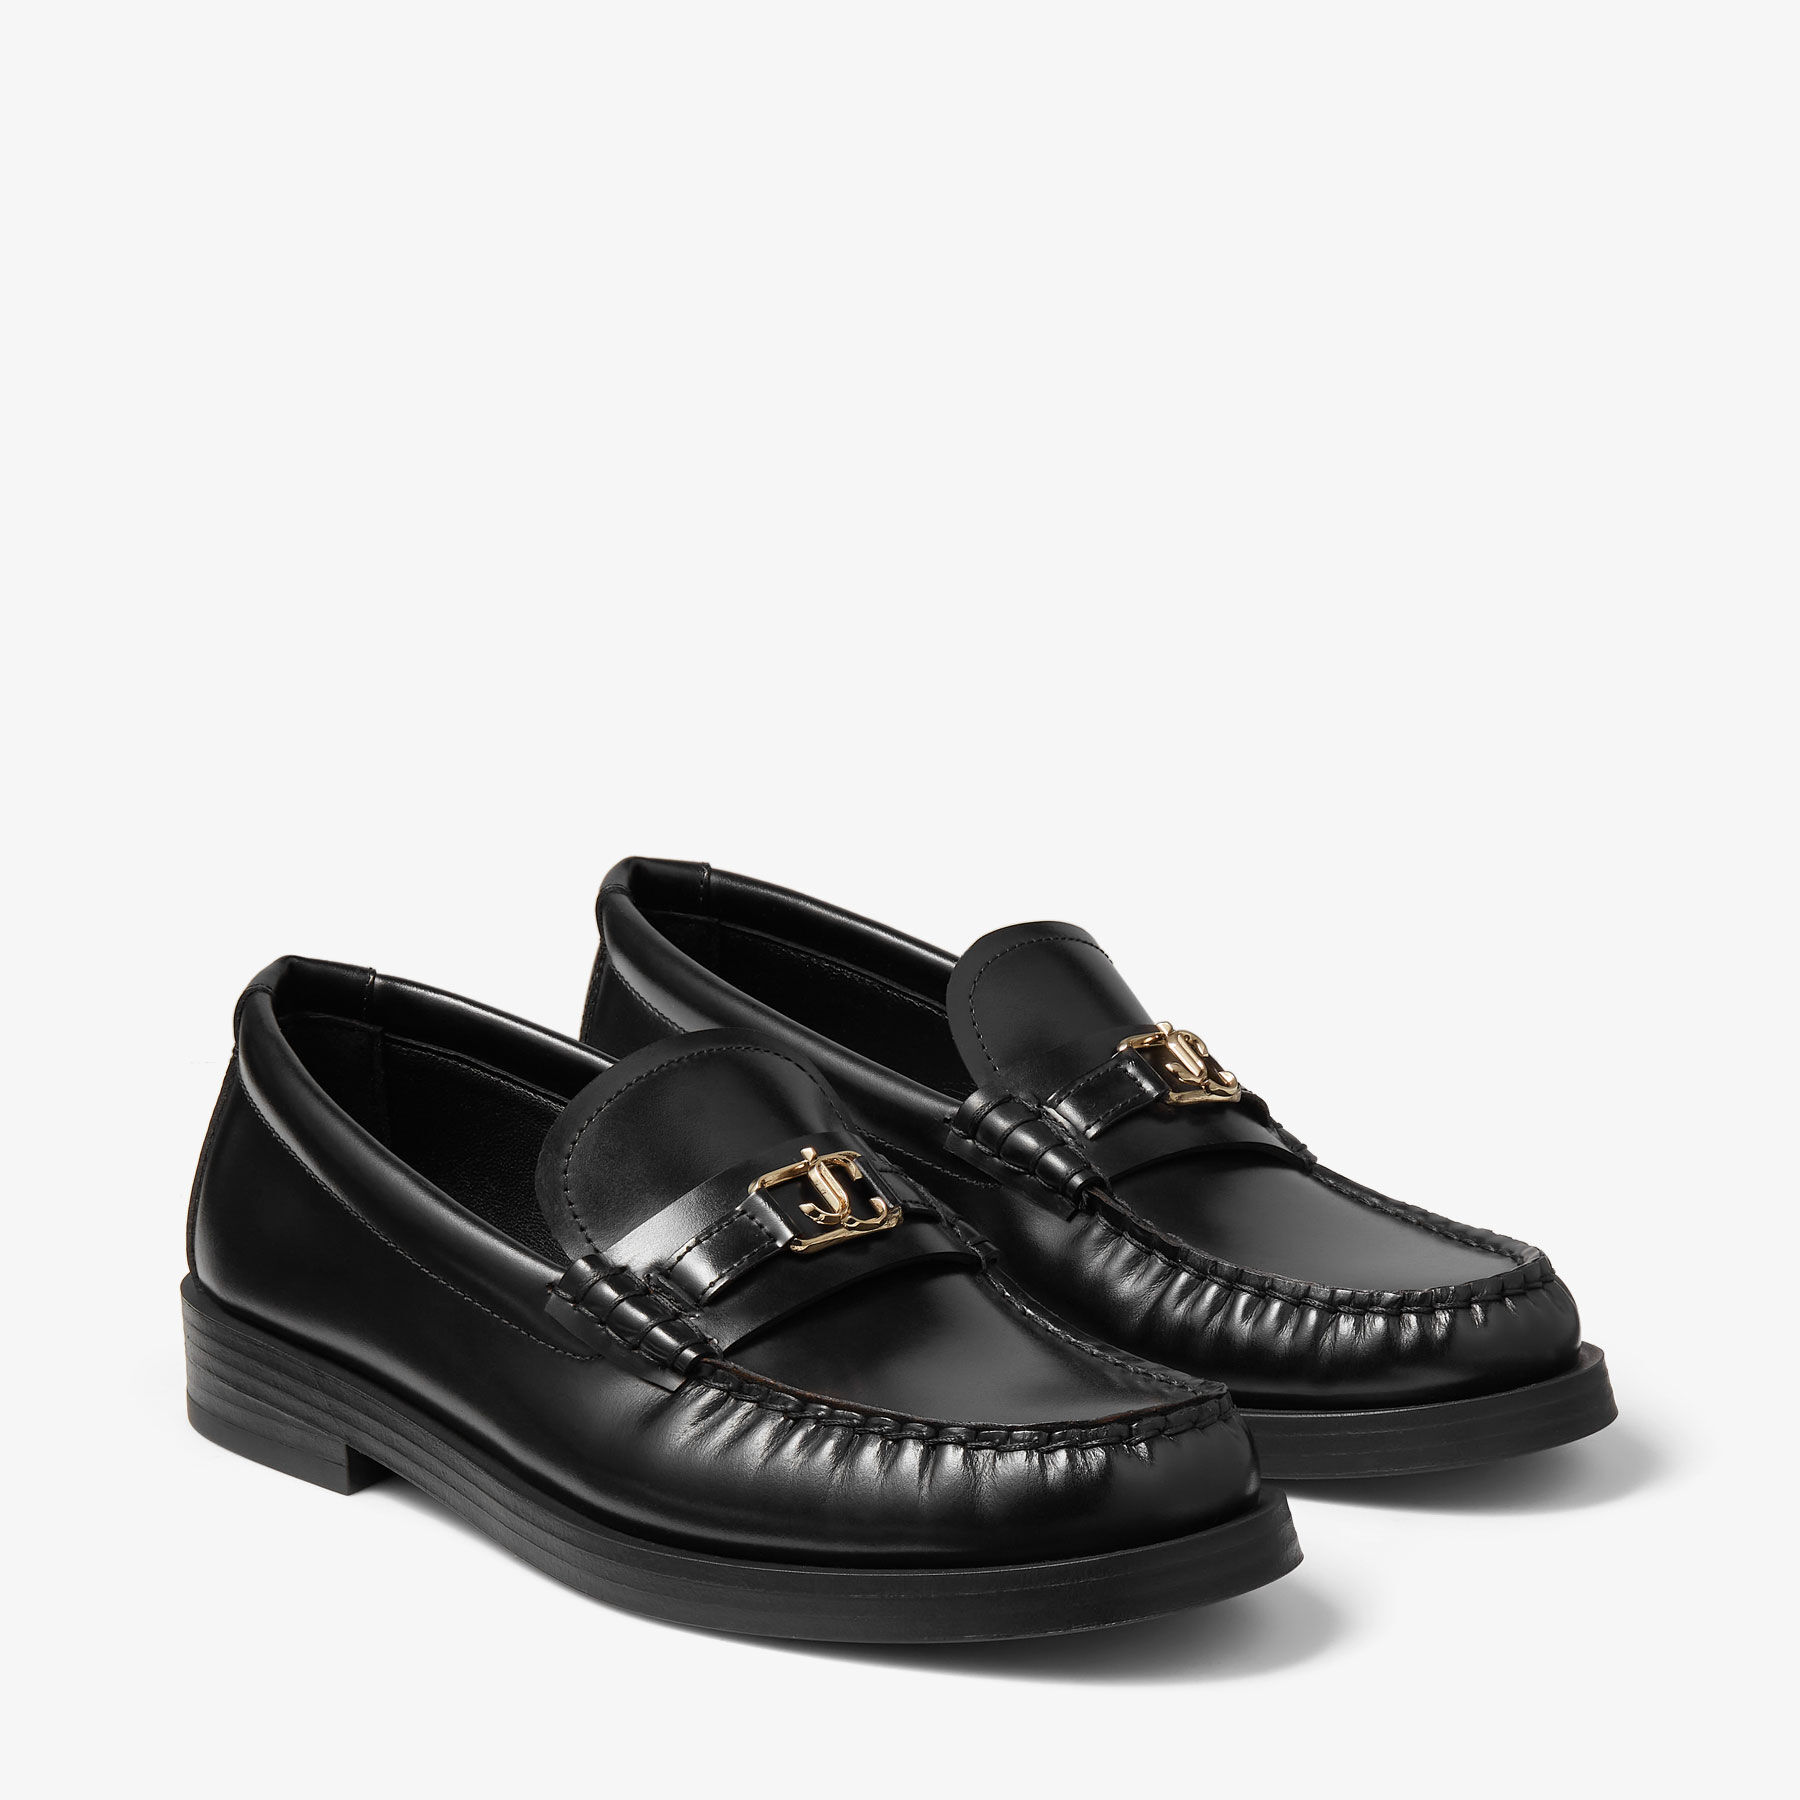 Addie/JC | Black Box Calf Leather Flat Loafers with JC Emblem 